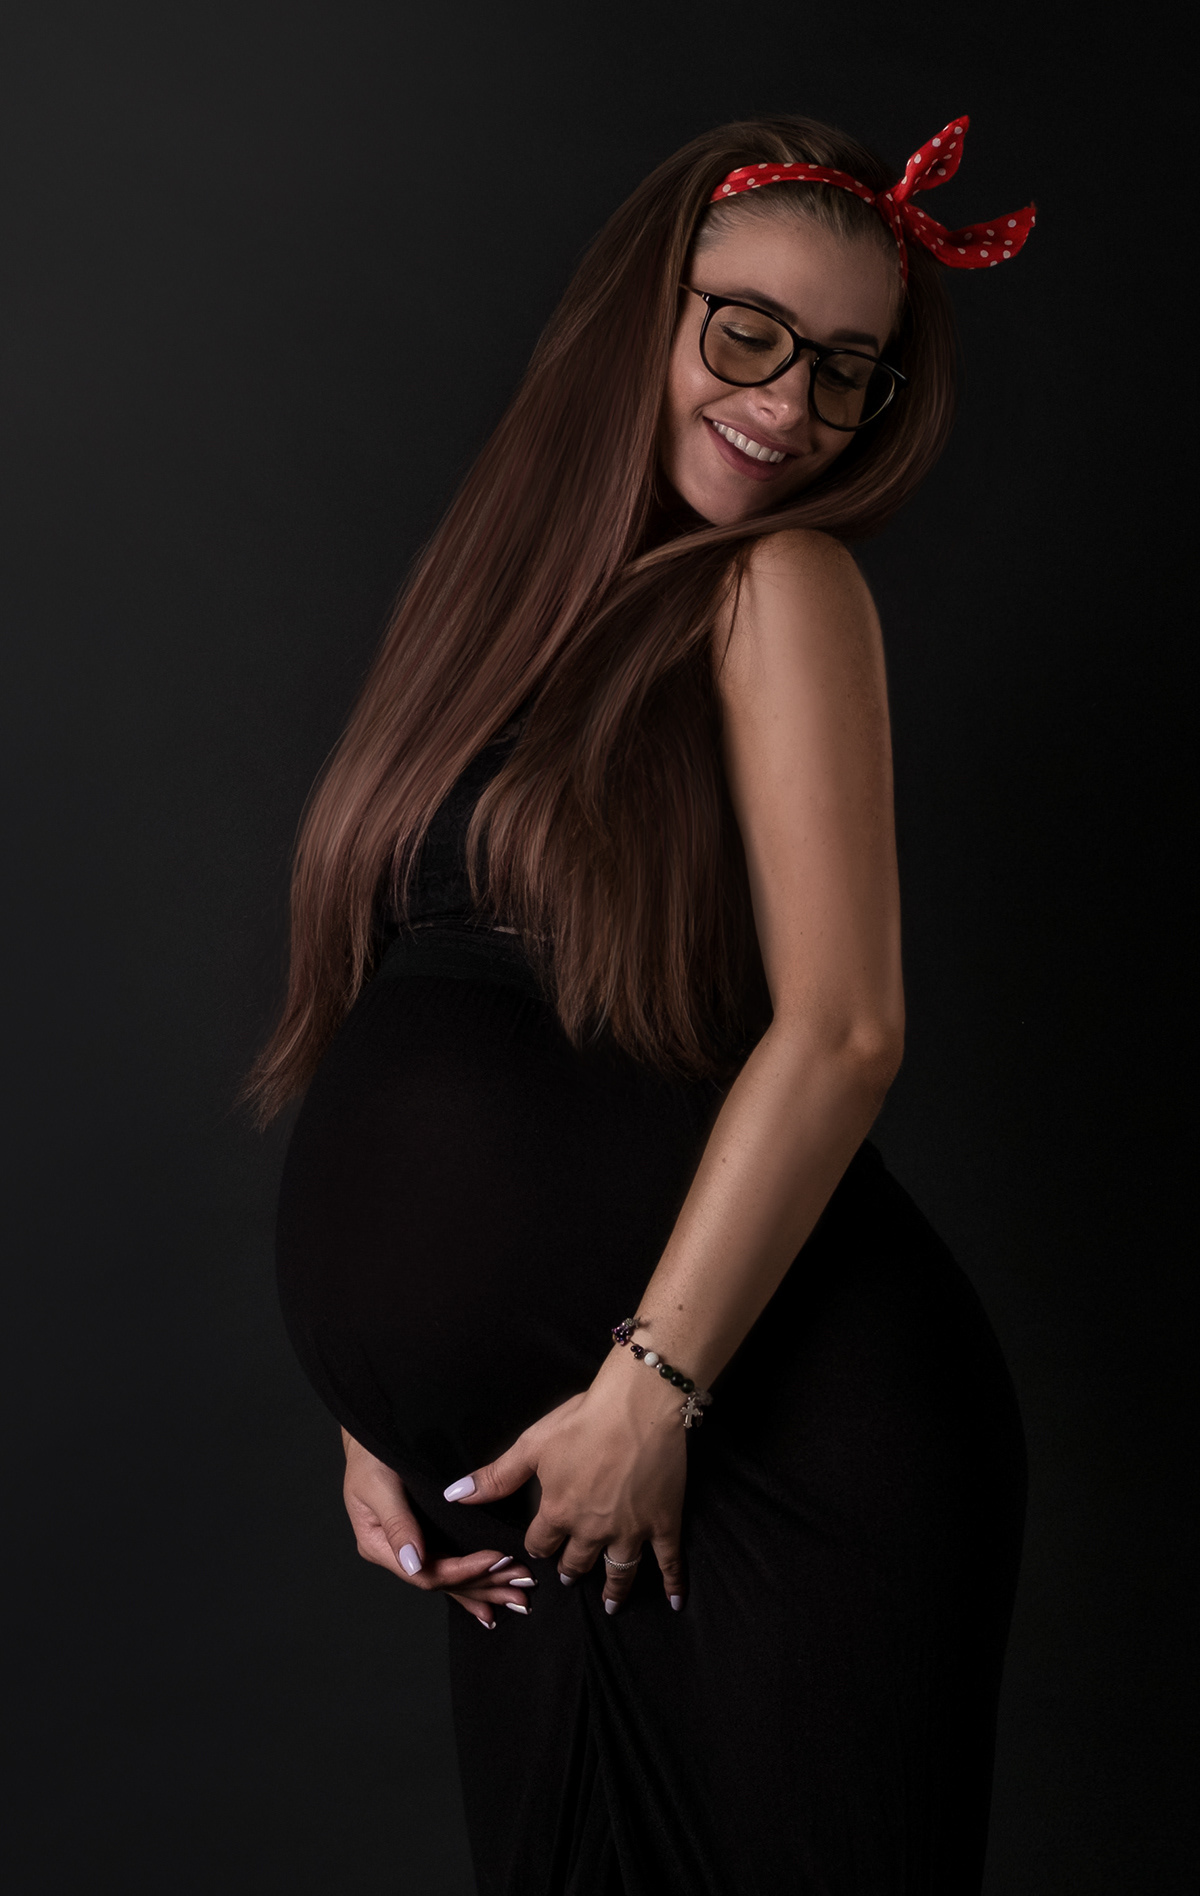 family maternity pregnancy photography pregnant voightlander woman xpro1 fujifilm photoshoot pregnant woman